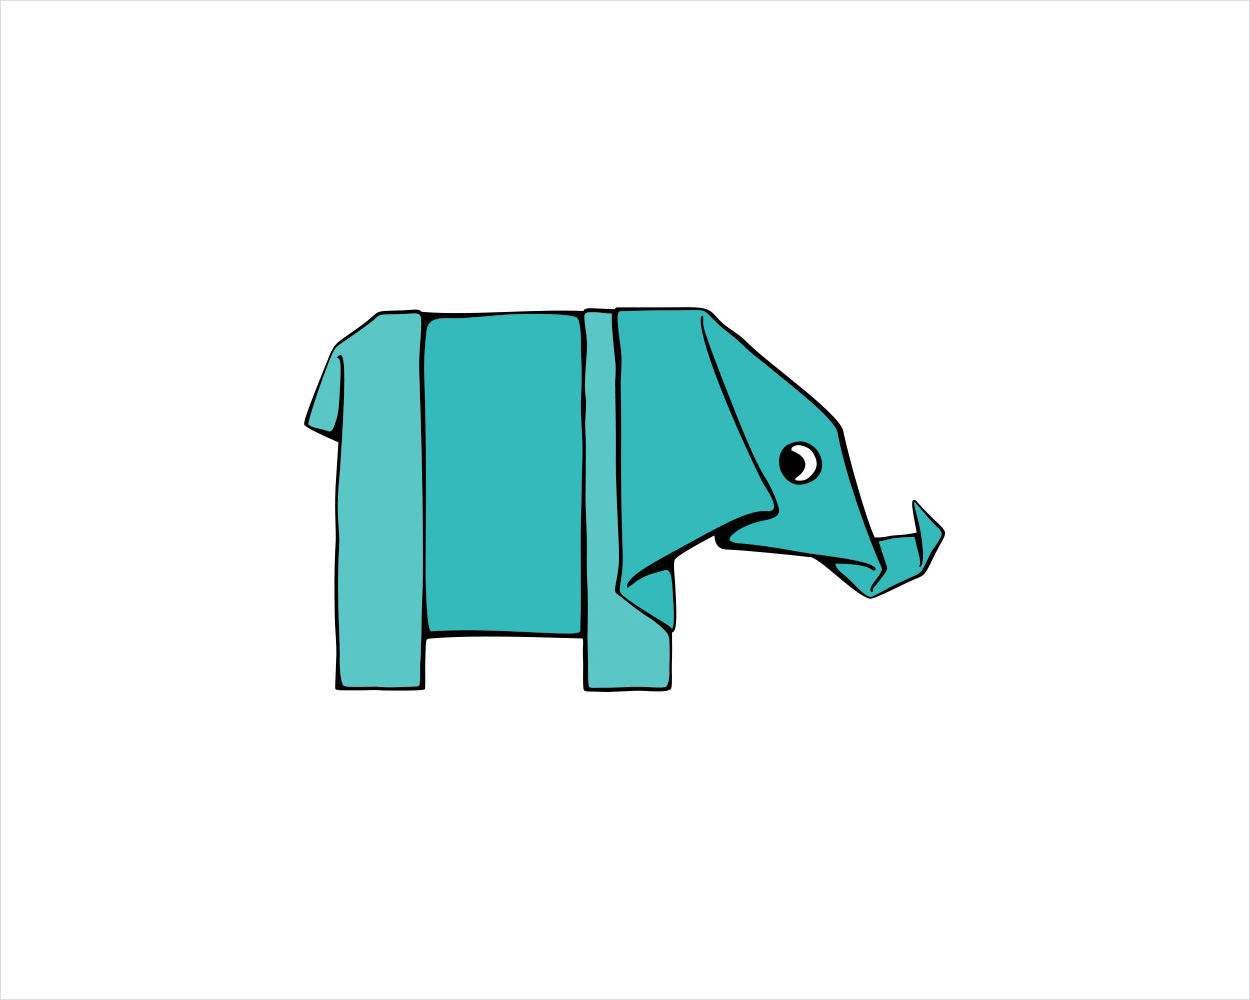 blue elephant with origami folds